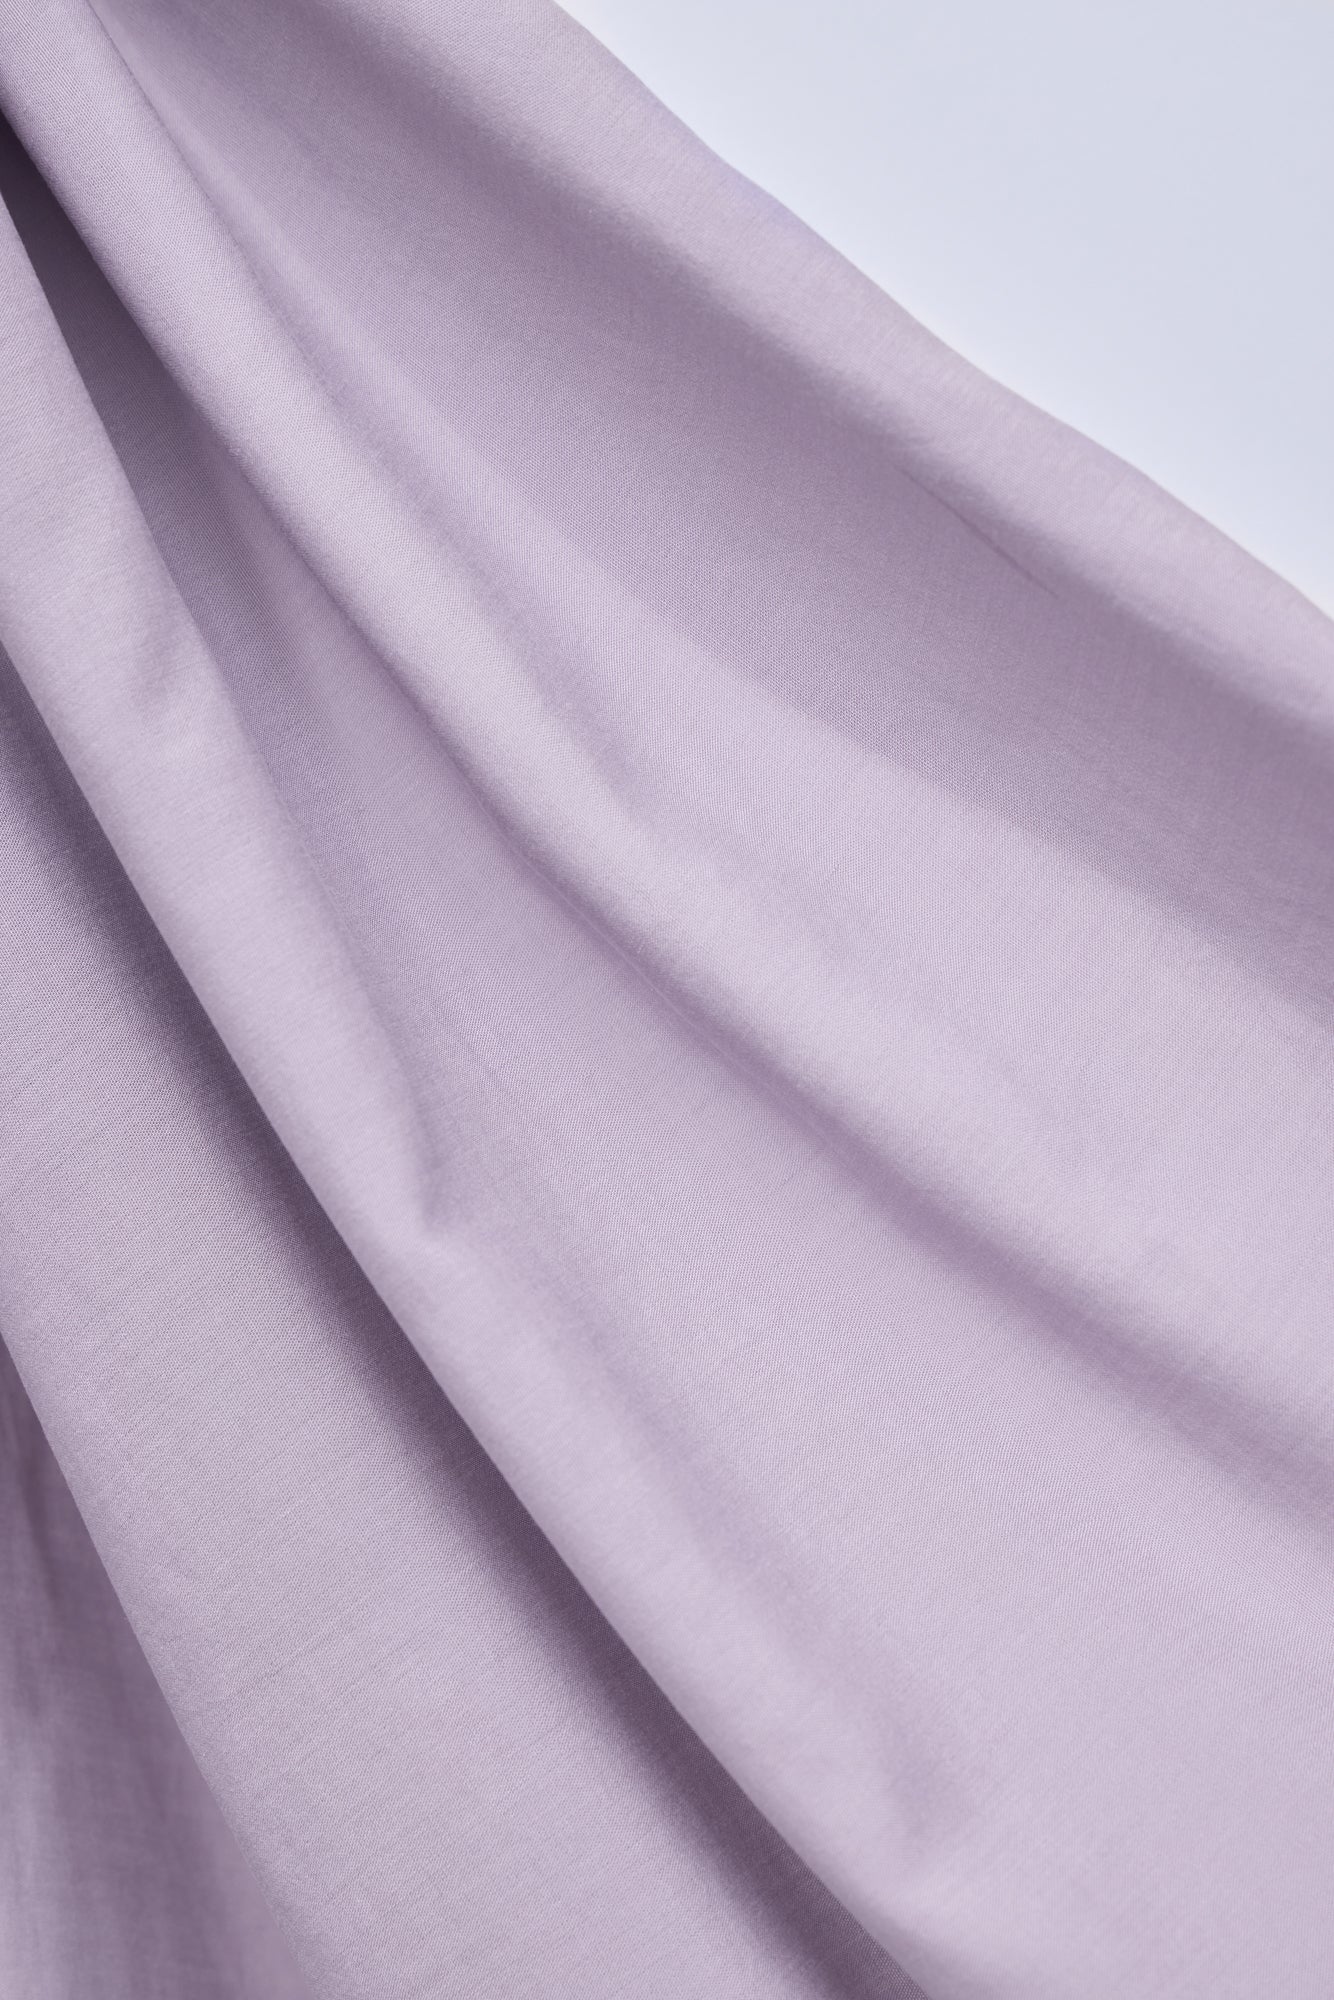 Close up of Vida voile tencel sewing fabric in colour purple haze